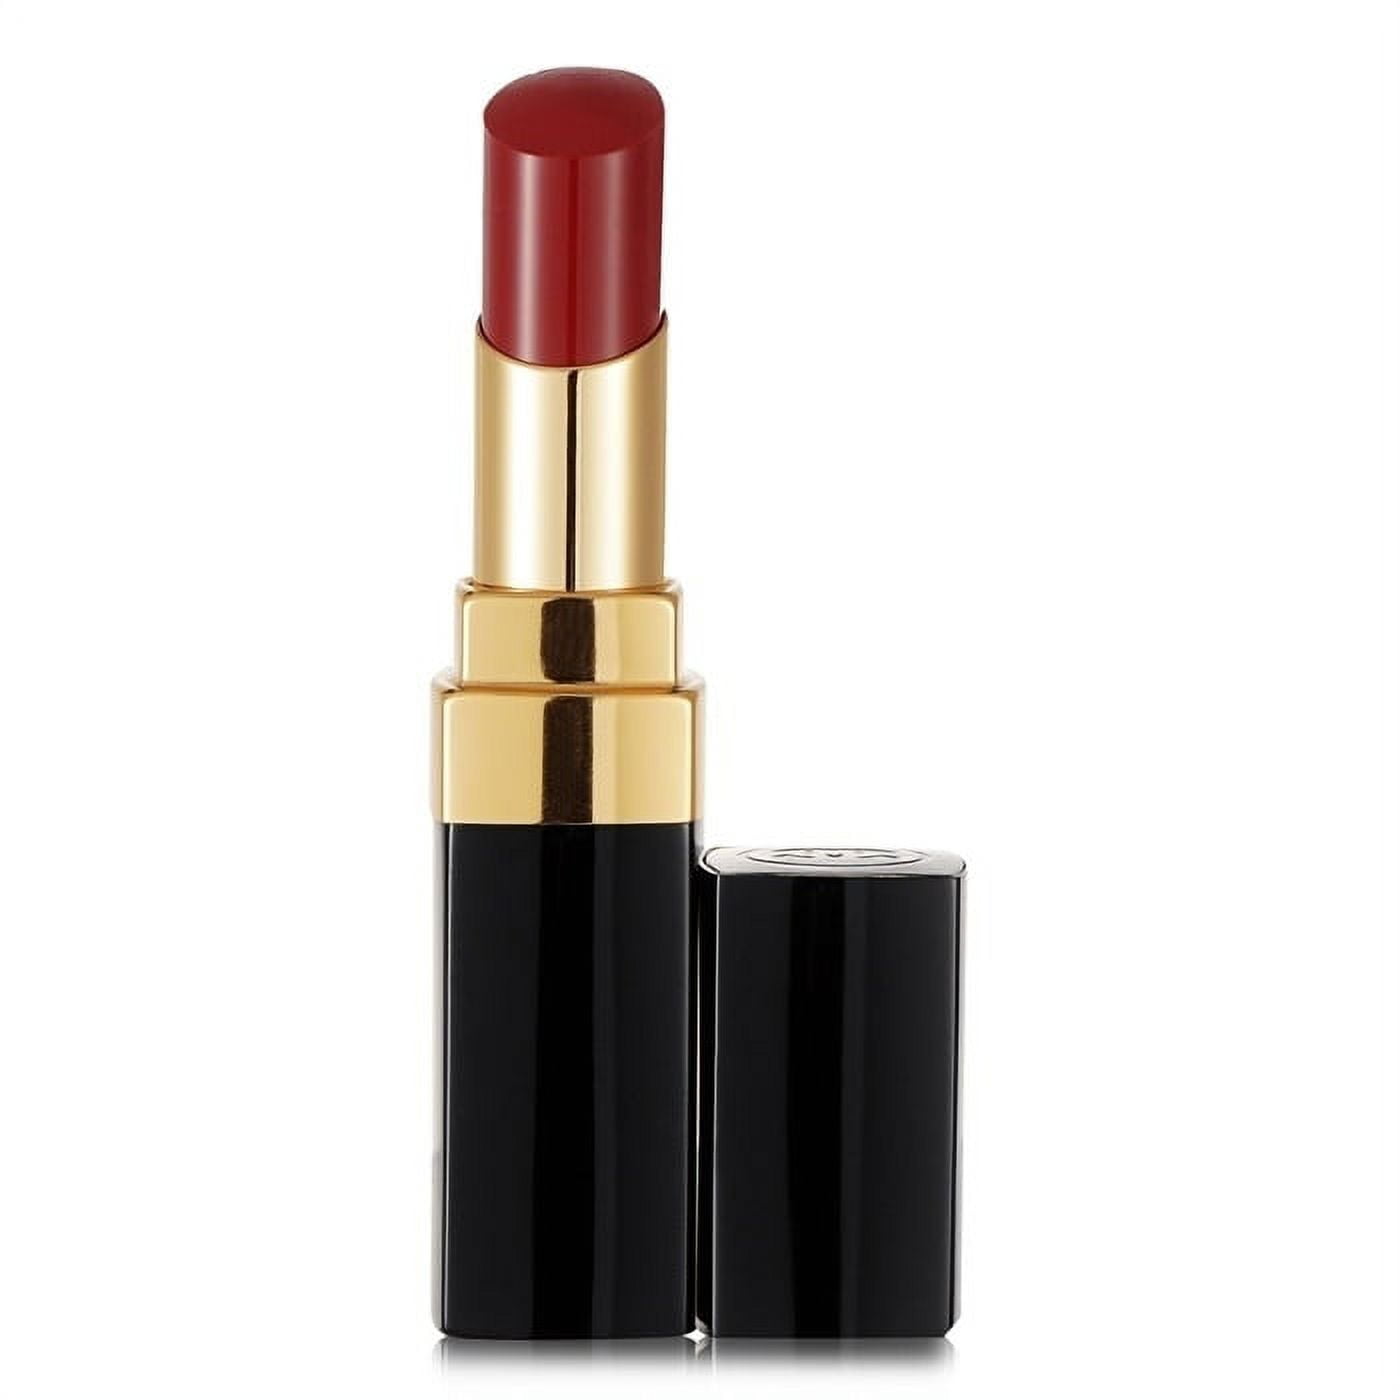 Chanel Rouge Coco Flash Hydrating Vibrant Shine Lip Colour - # 98 Instinct  3g/0.1oz